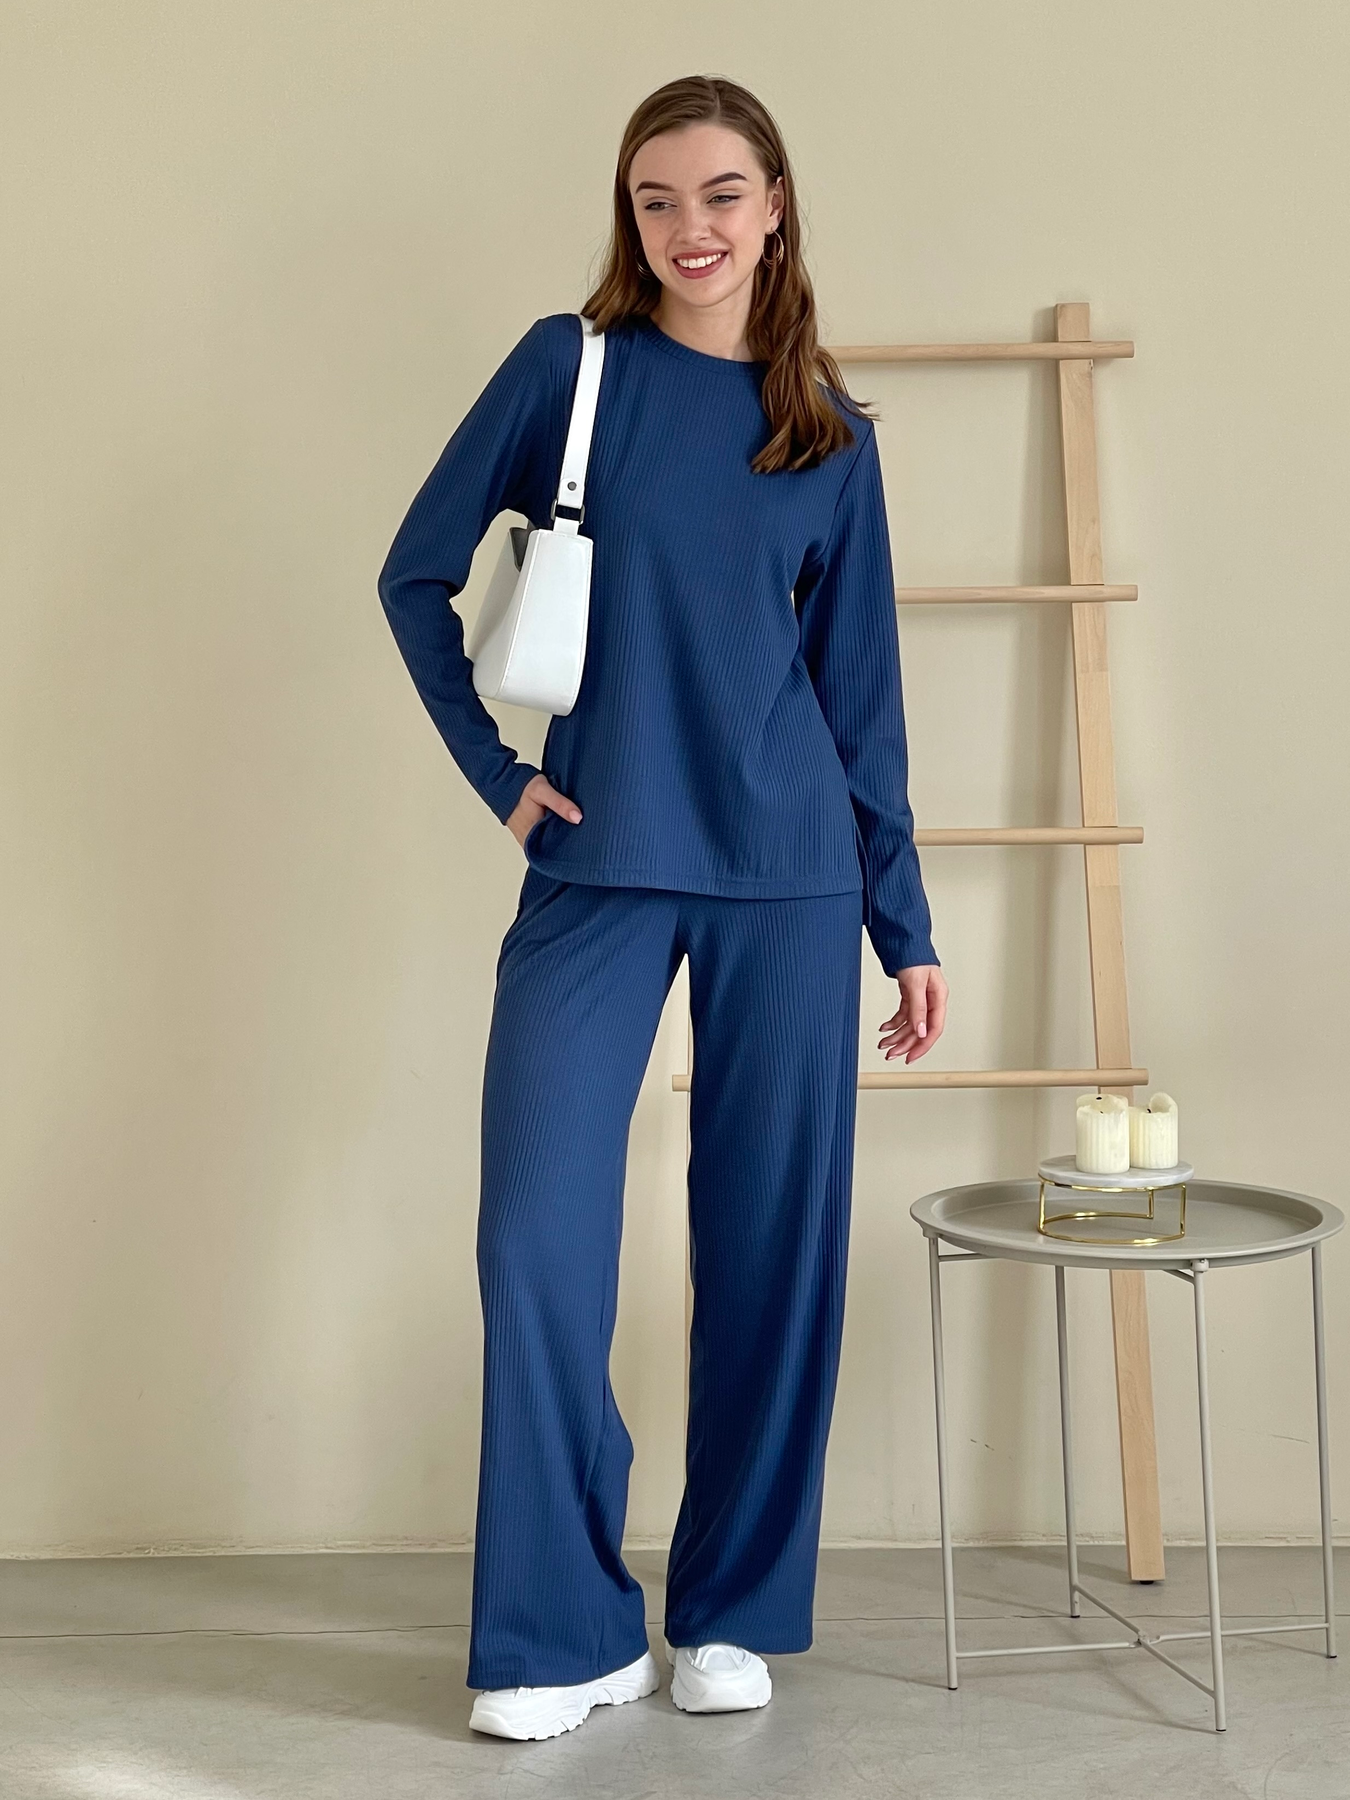 Купить Костюм с широкими брюками в рубчик синий Merlini Менто 100001163, размер 46-48 (L-XL) в интернет-магазине